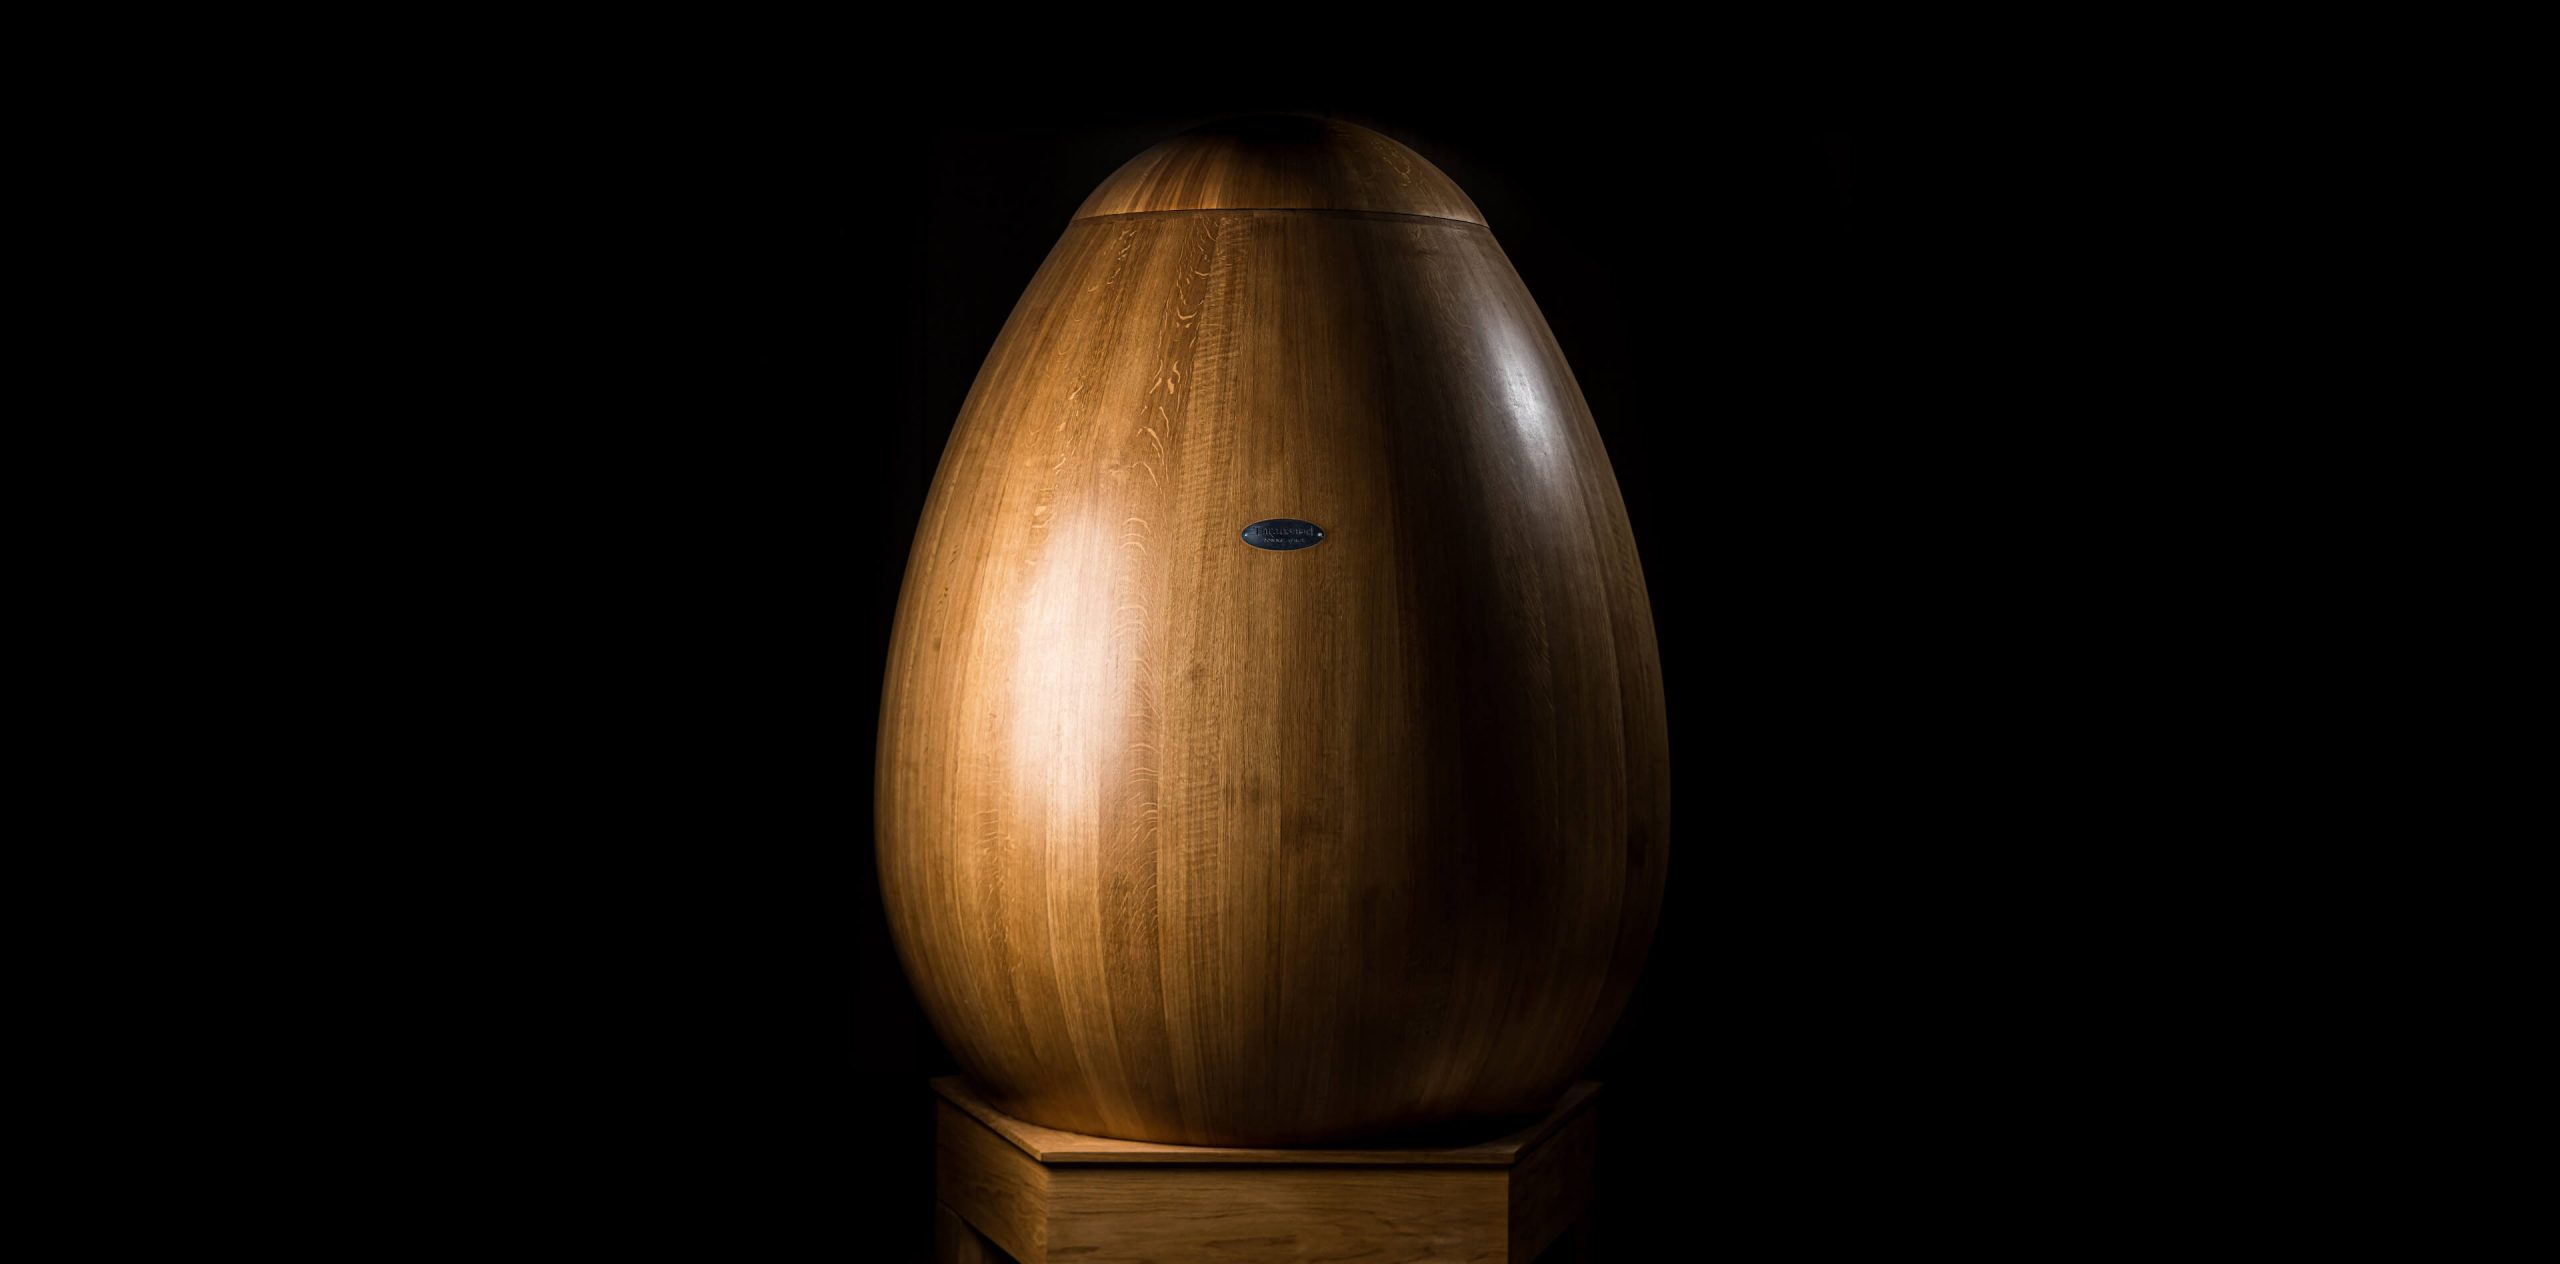 Ovum is the world's first egg-shaped barrel